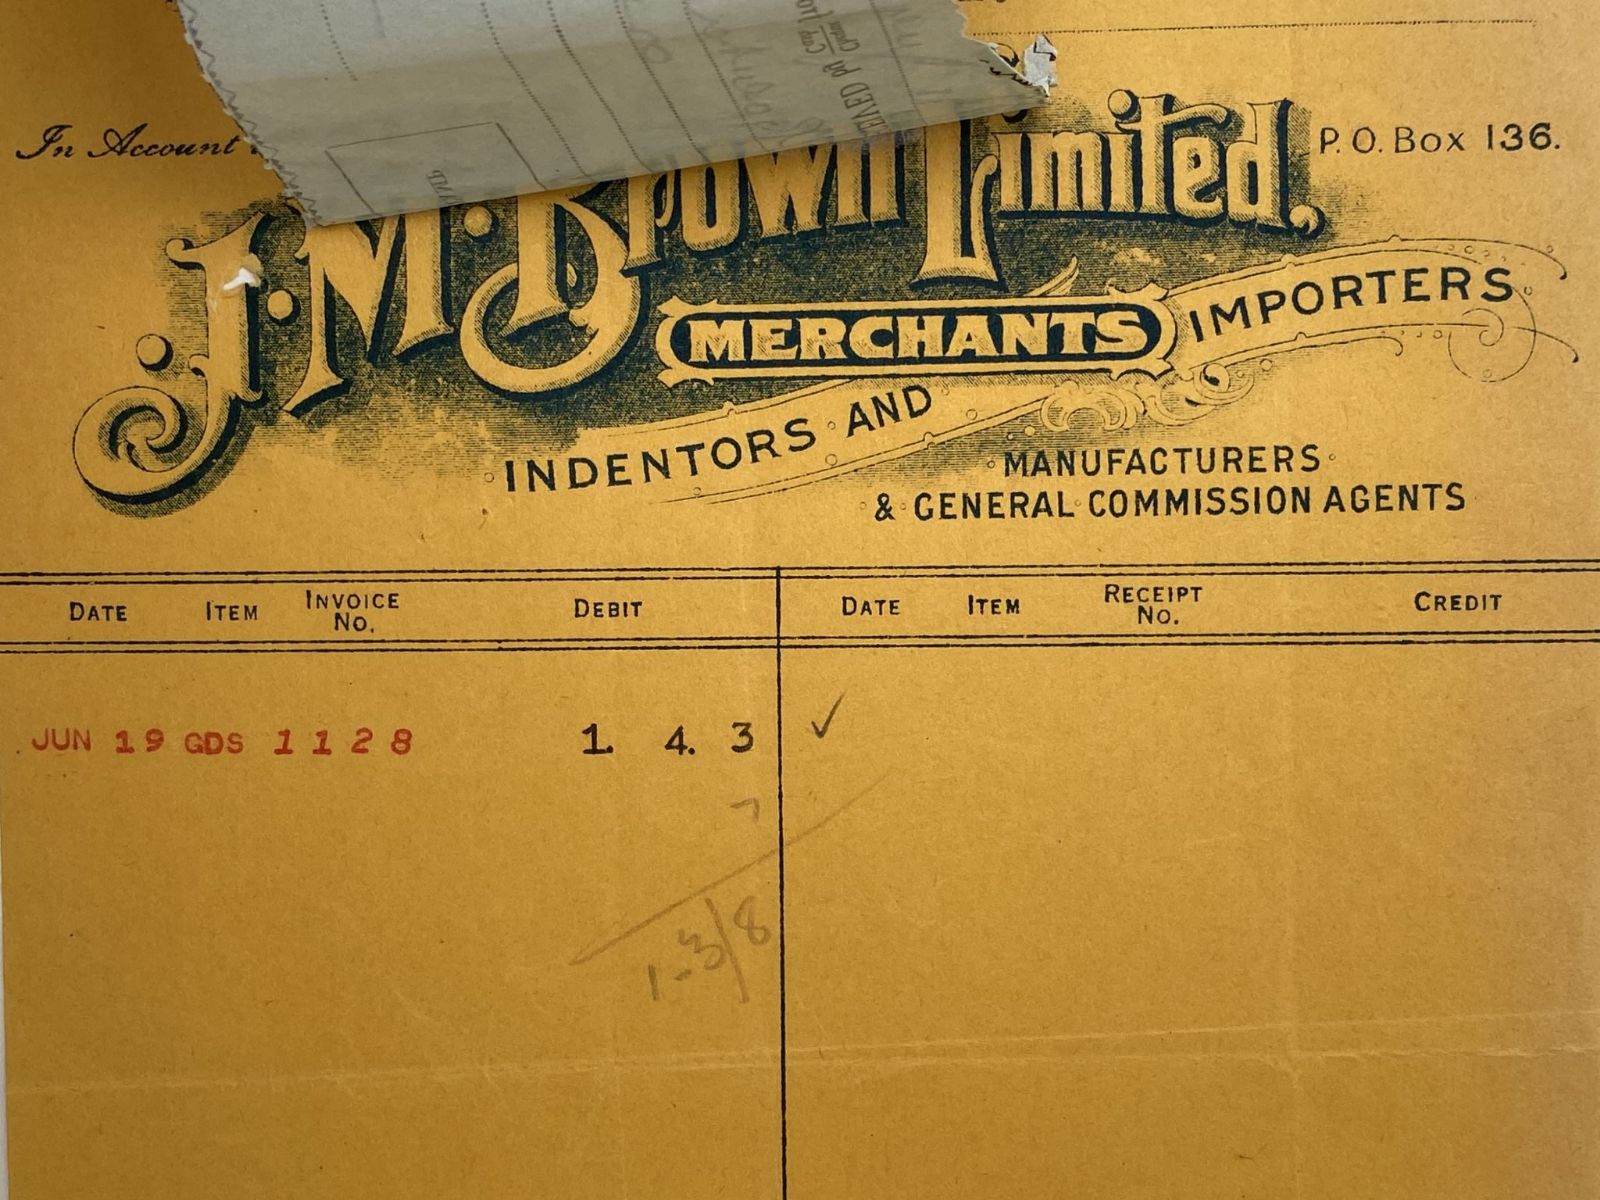 VINTAGE INVOICE / RECEIPT: J. M. Brown Ltd. Invercargill – Merchants 1934